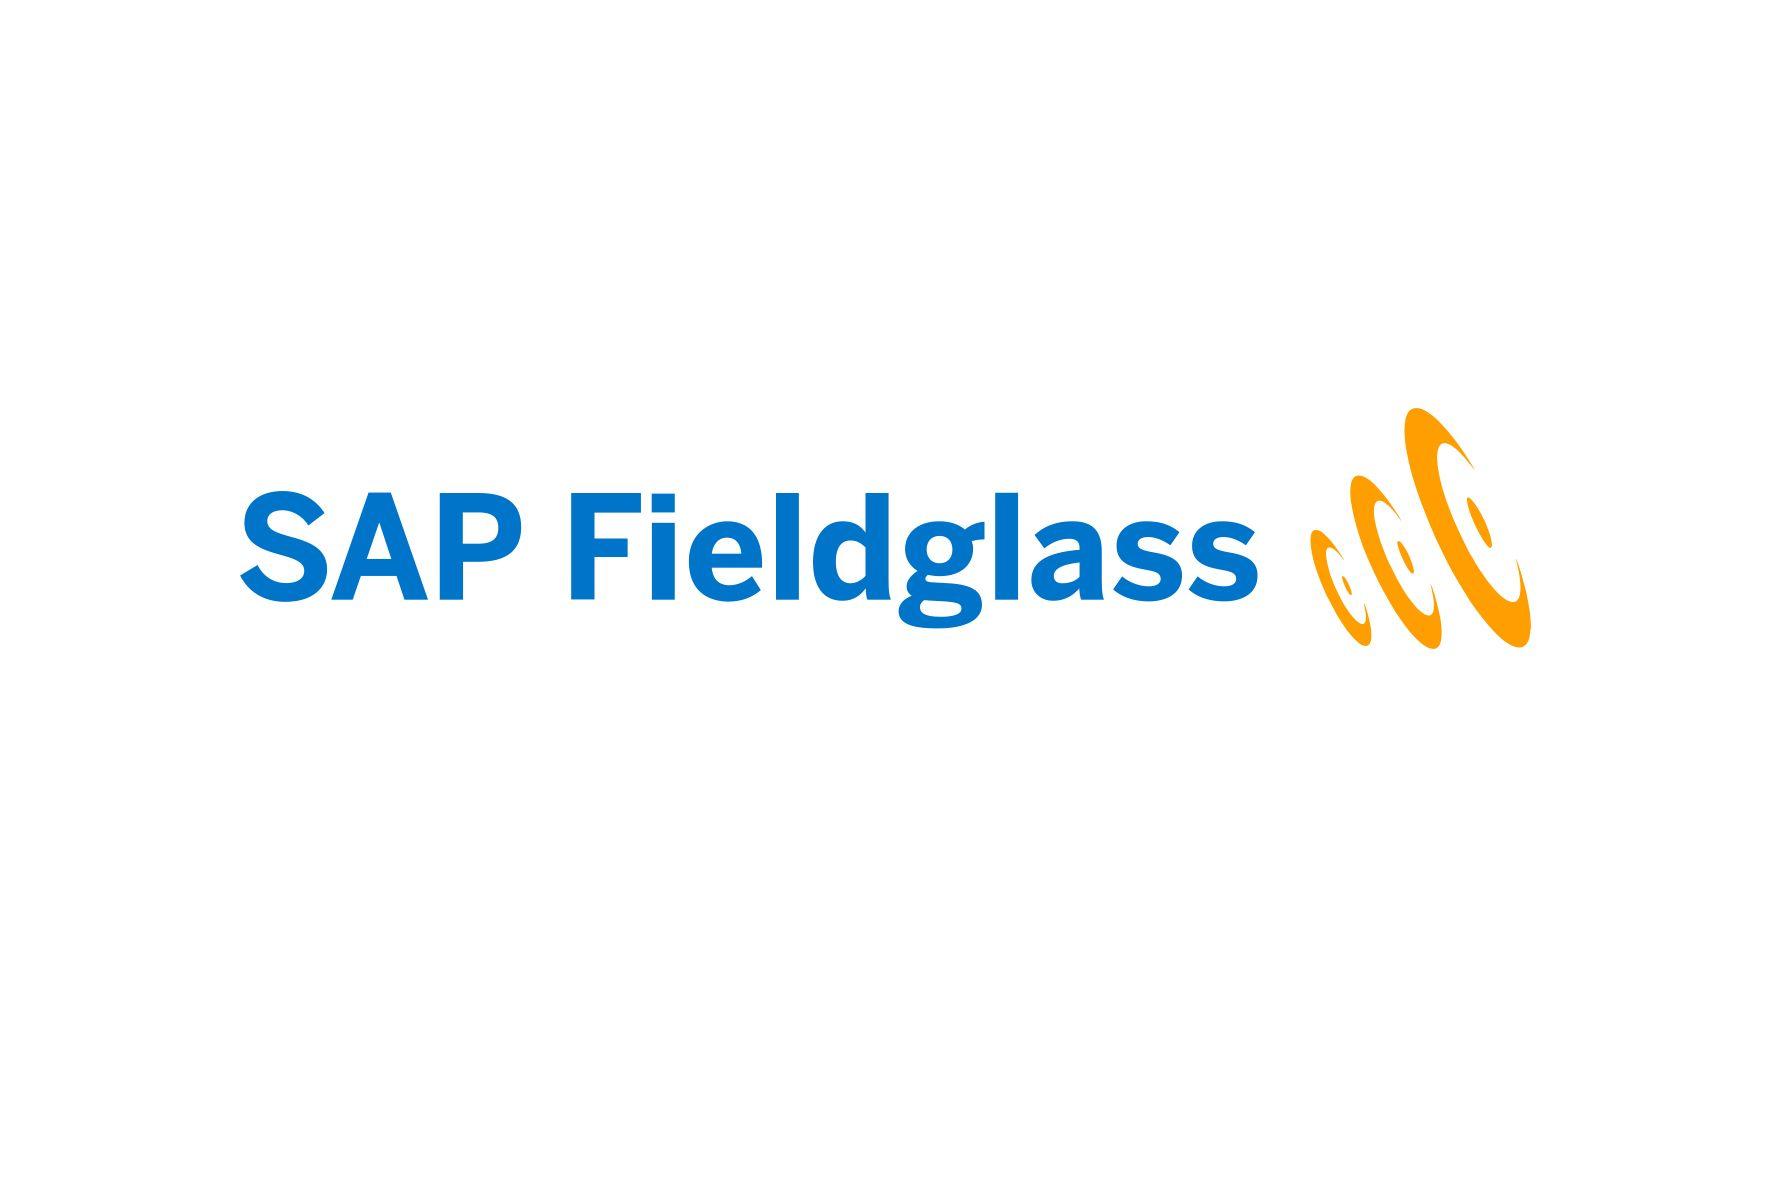 Fieldglass Logo - About ExceleratedS2P - ExceleratedS2P